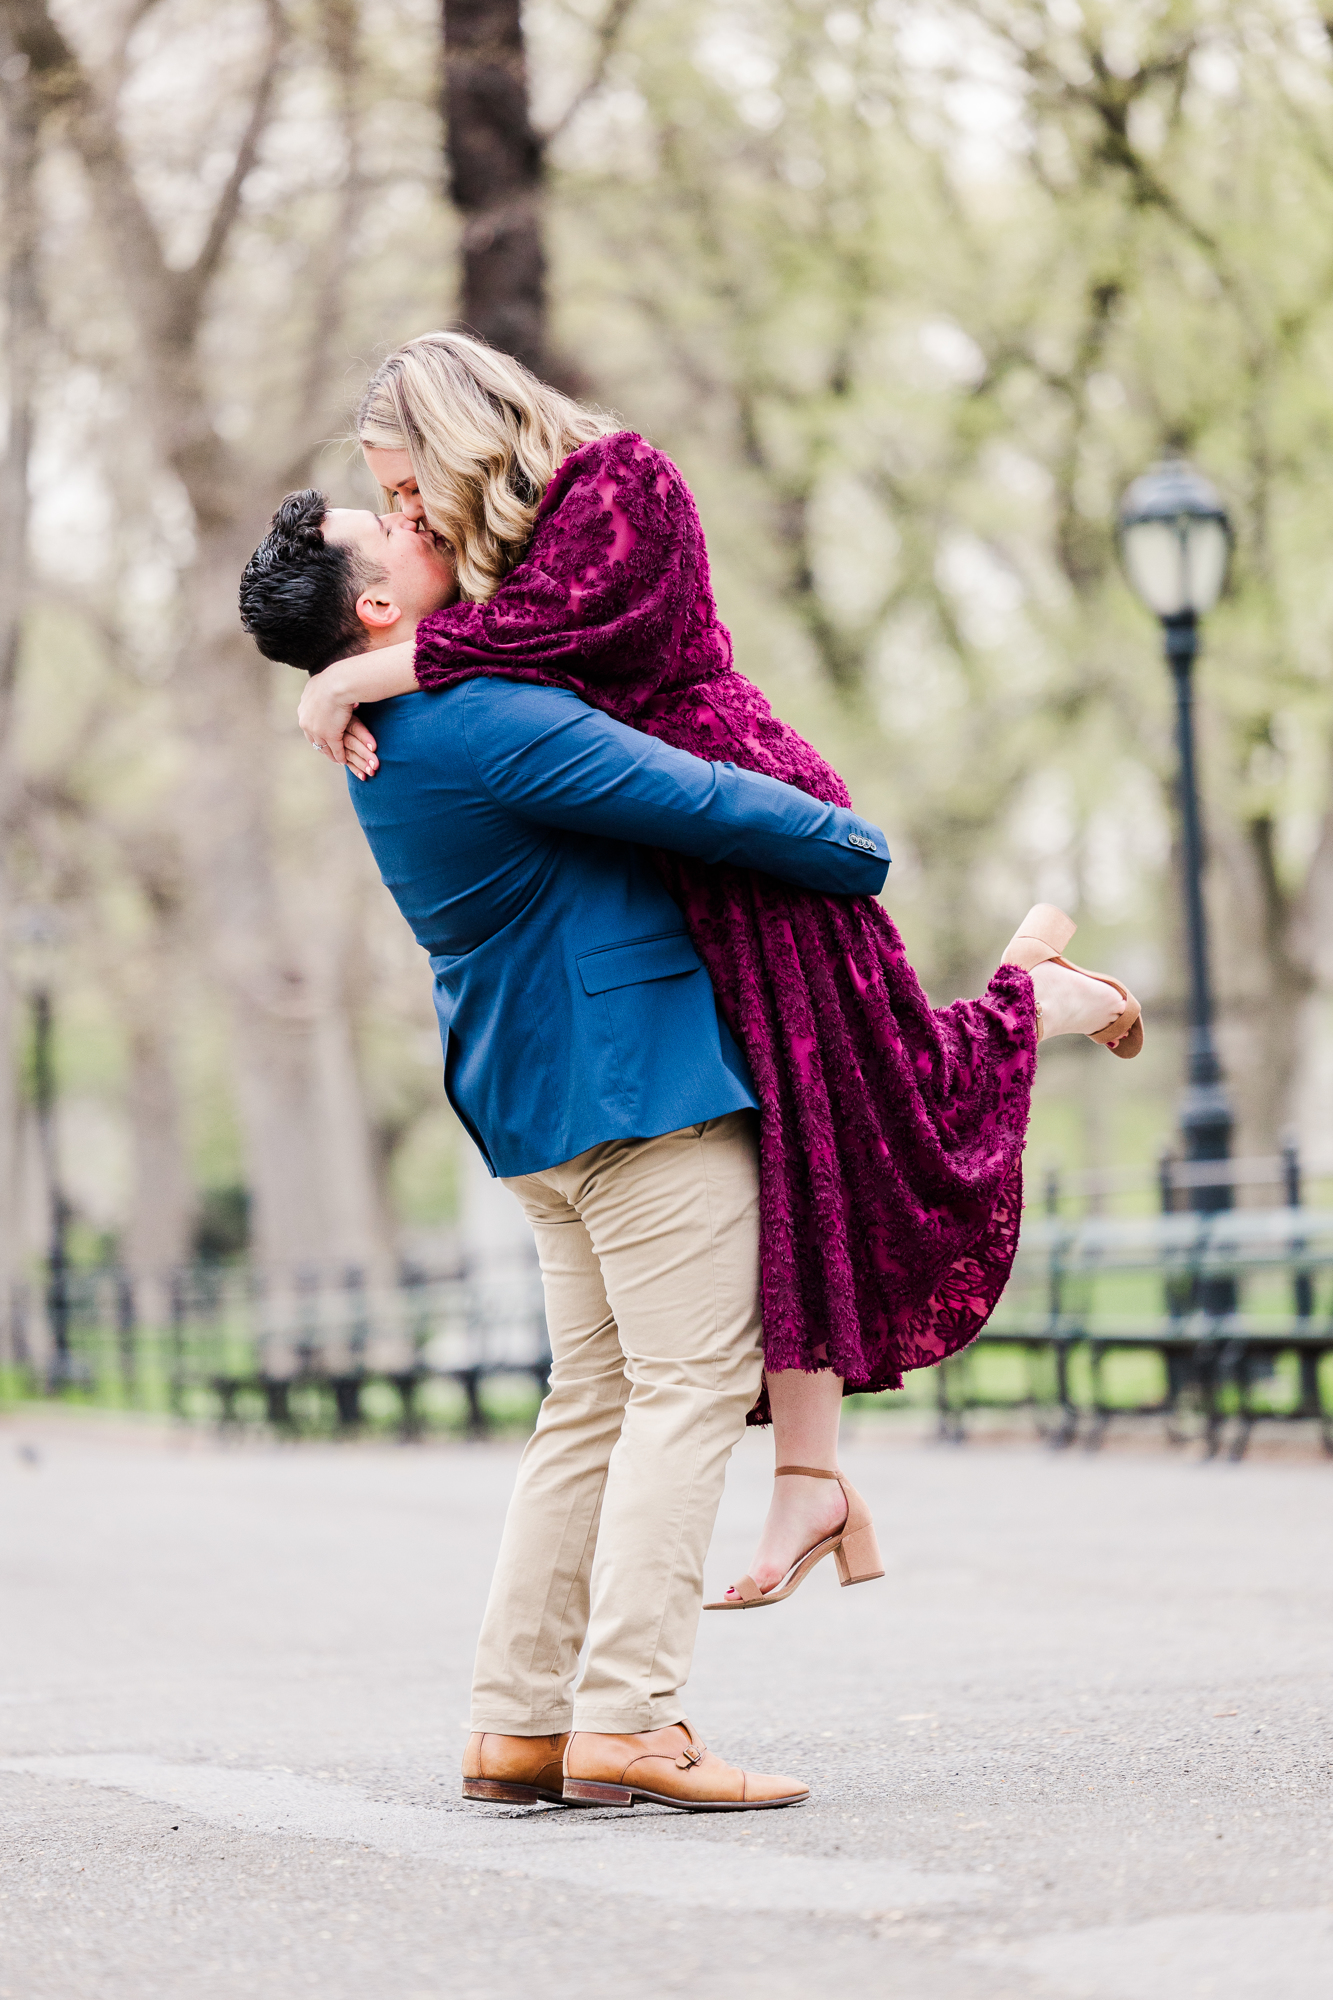 Joyous Engagement Pictures in Central Park